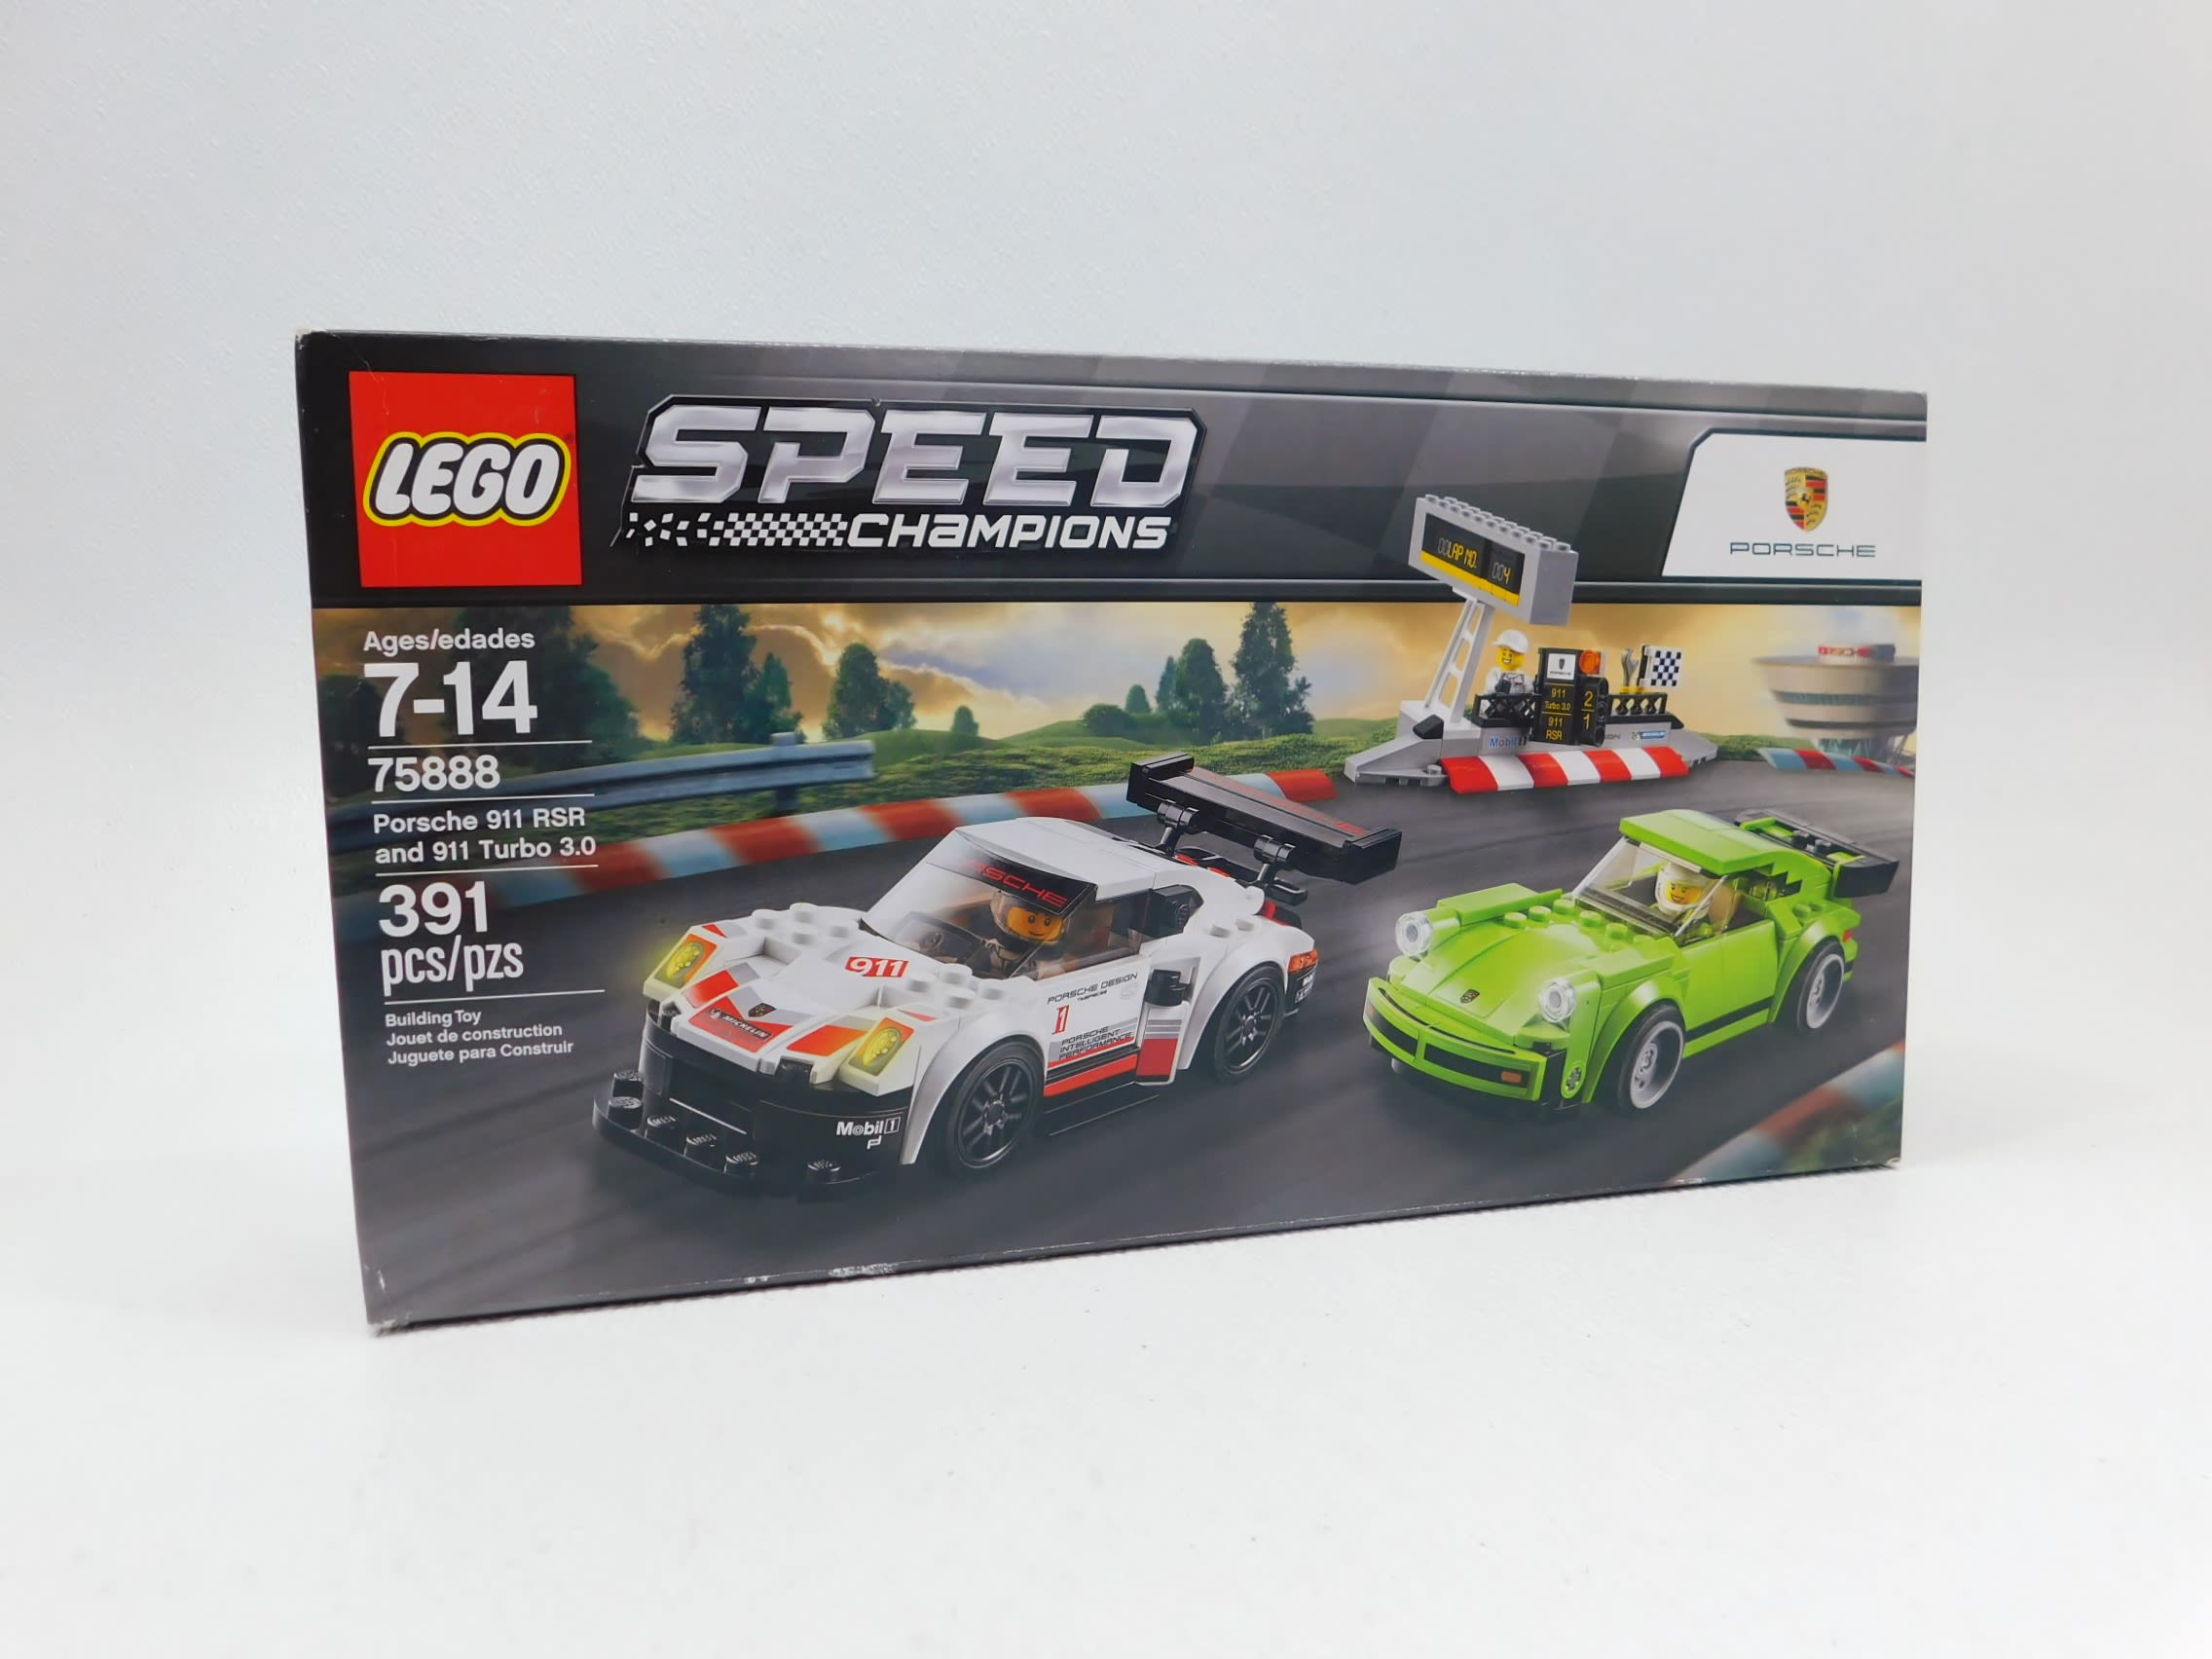  LEGO Speed Champions Porsche 911 RSR and 911 Turbo 3.0